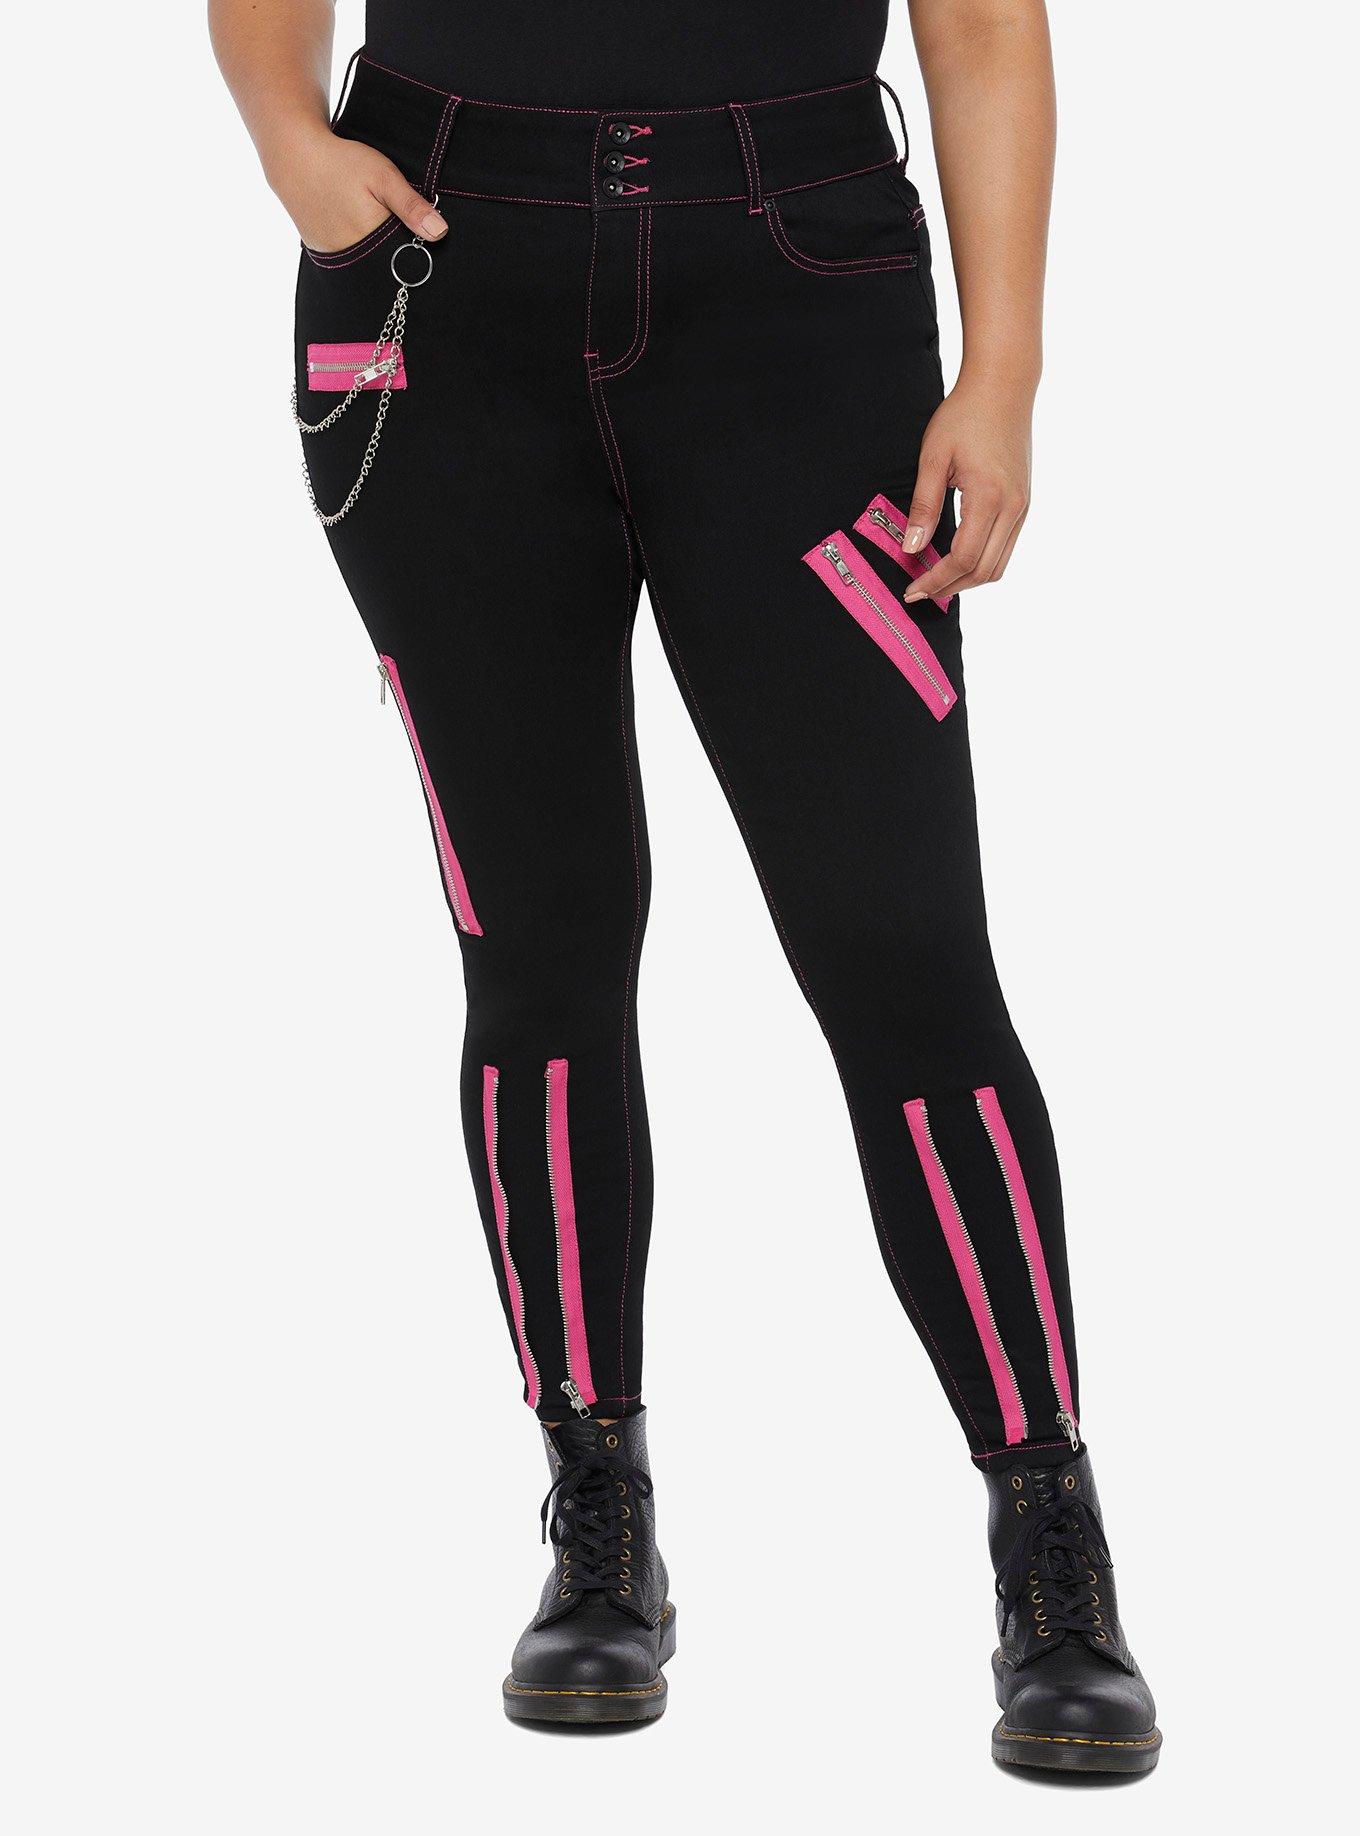 Black & Pink Zipper Super Skinny Jeans Plus Size